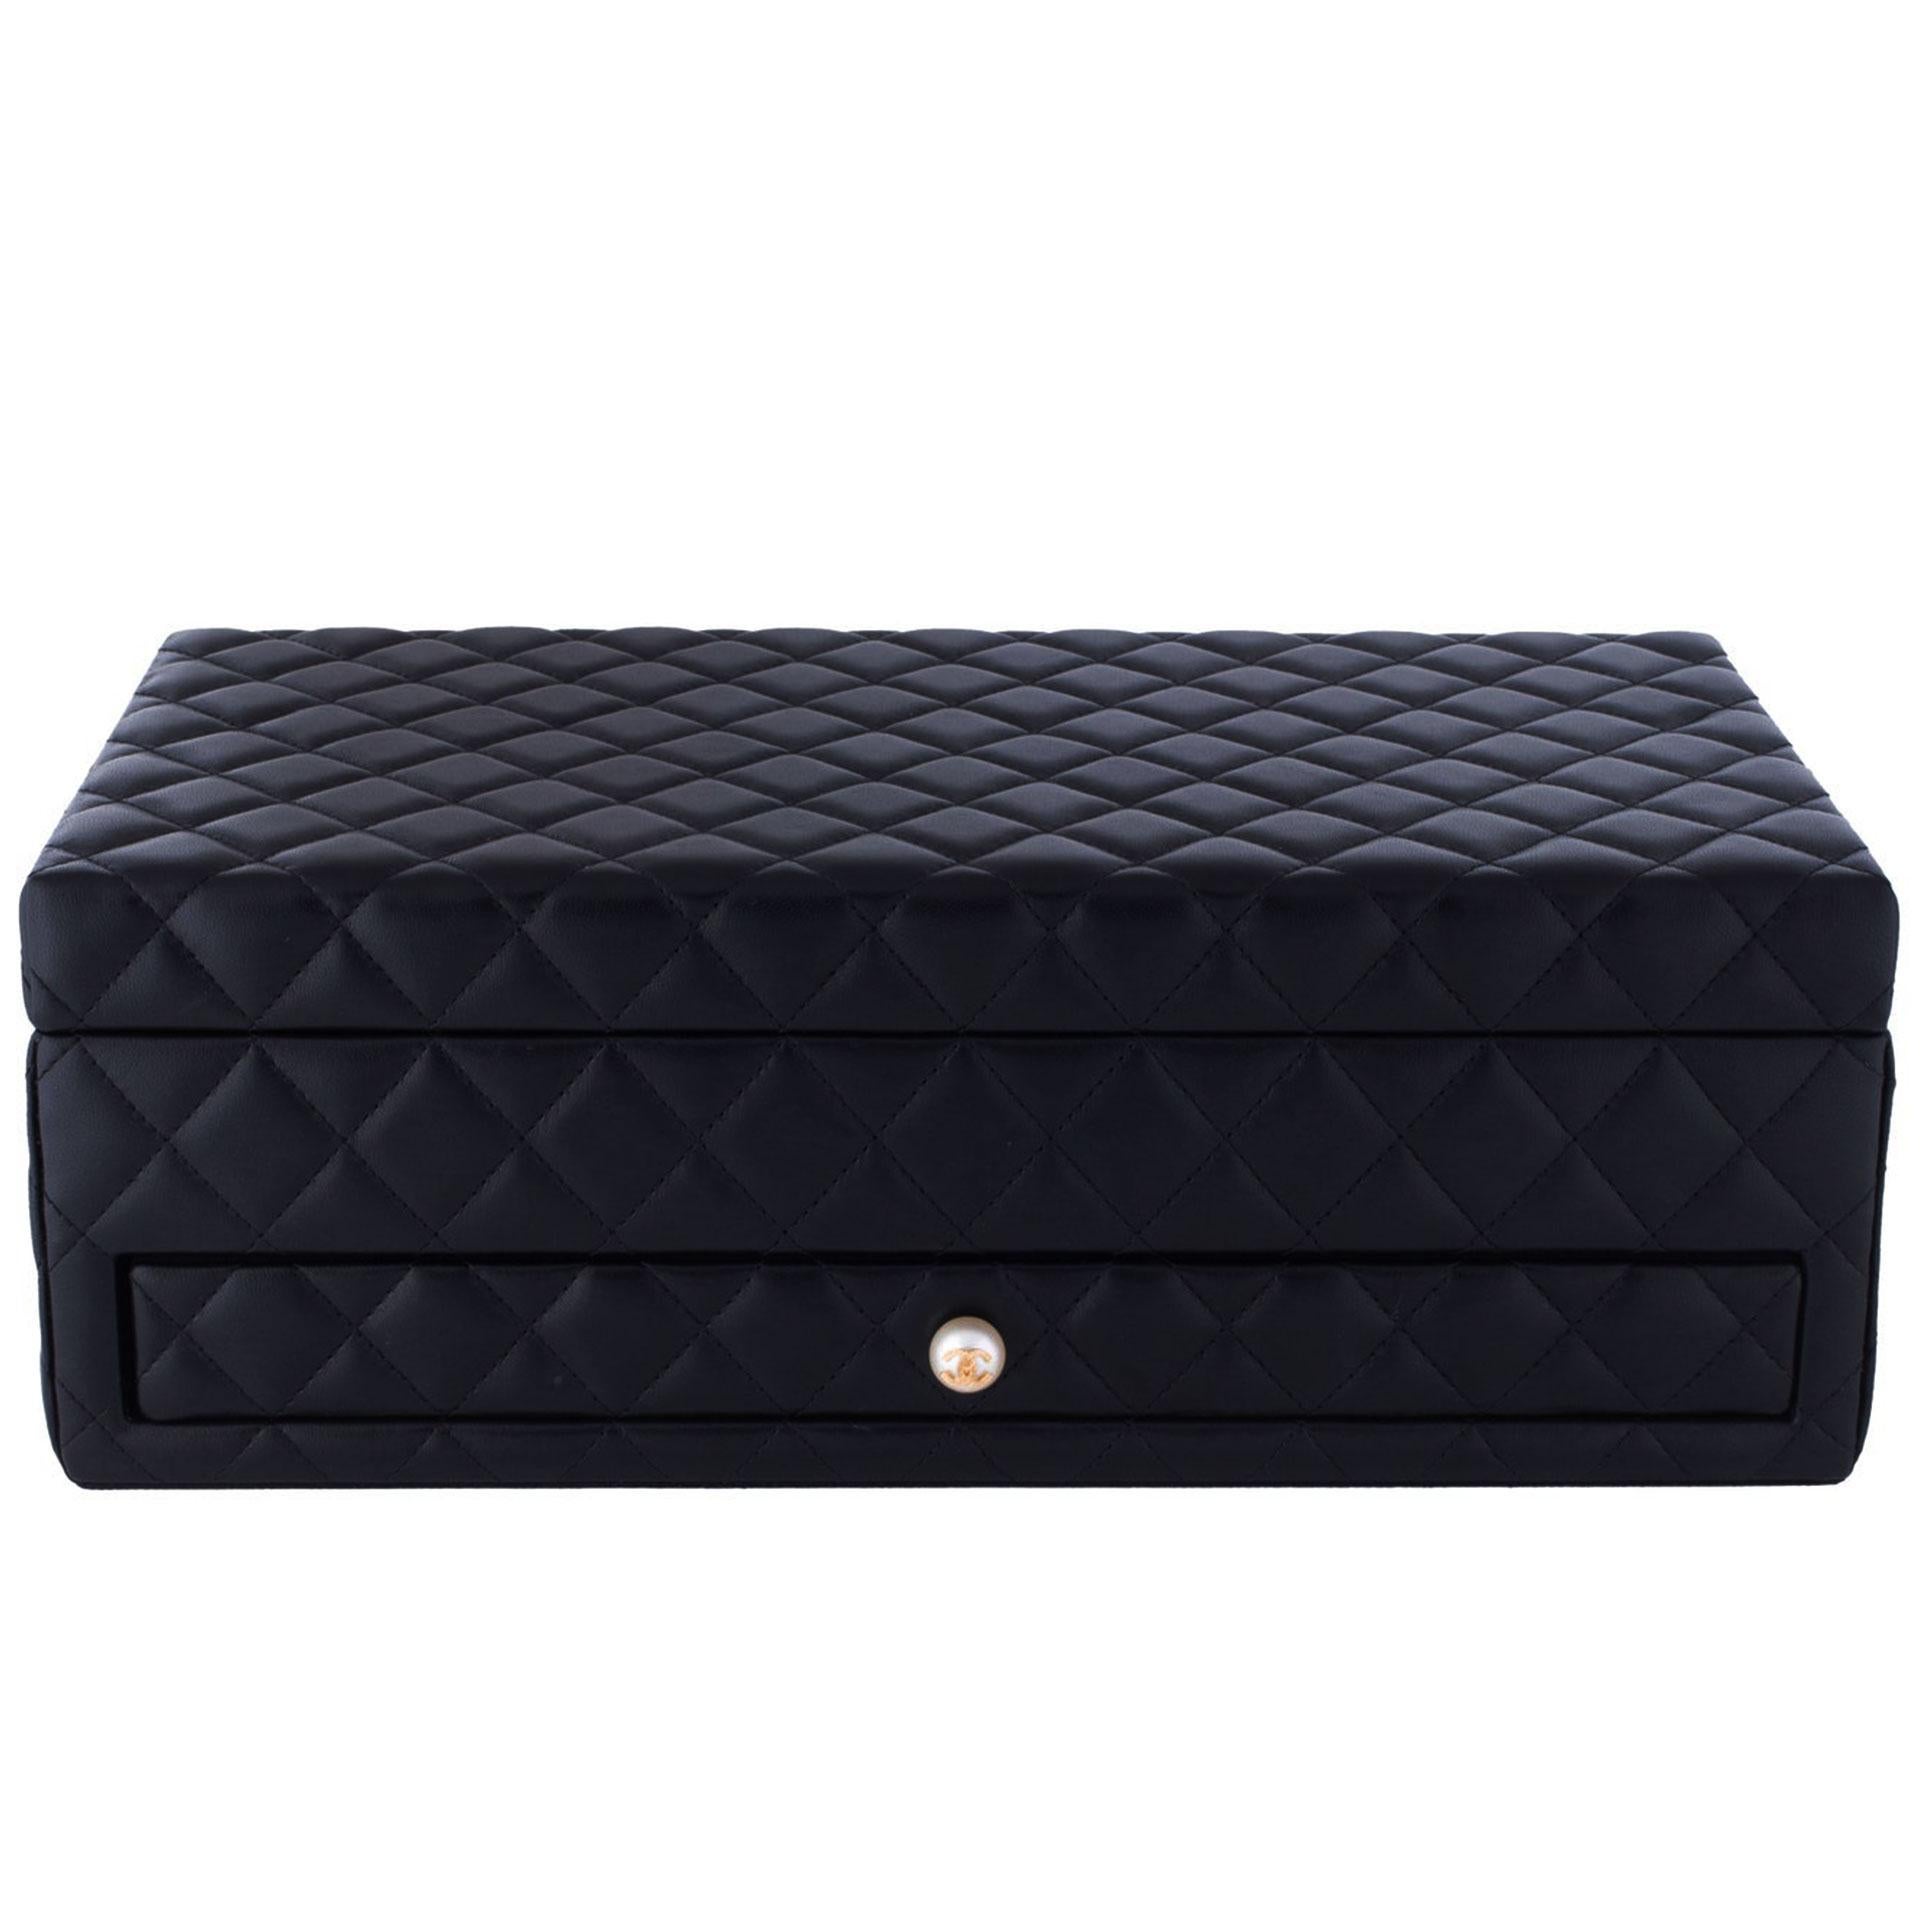 Chanel Black Vanity Case Limited Edition Rare Home Decor Cosmetic Jewelry Box  In Good Condition For Sale In Miami, FL